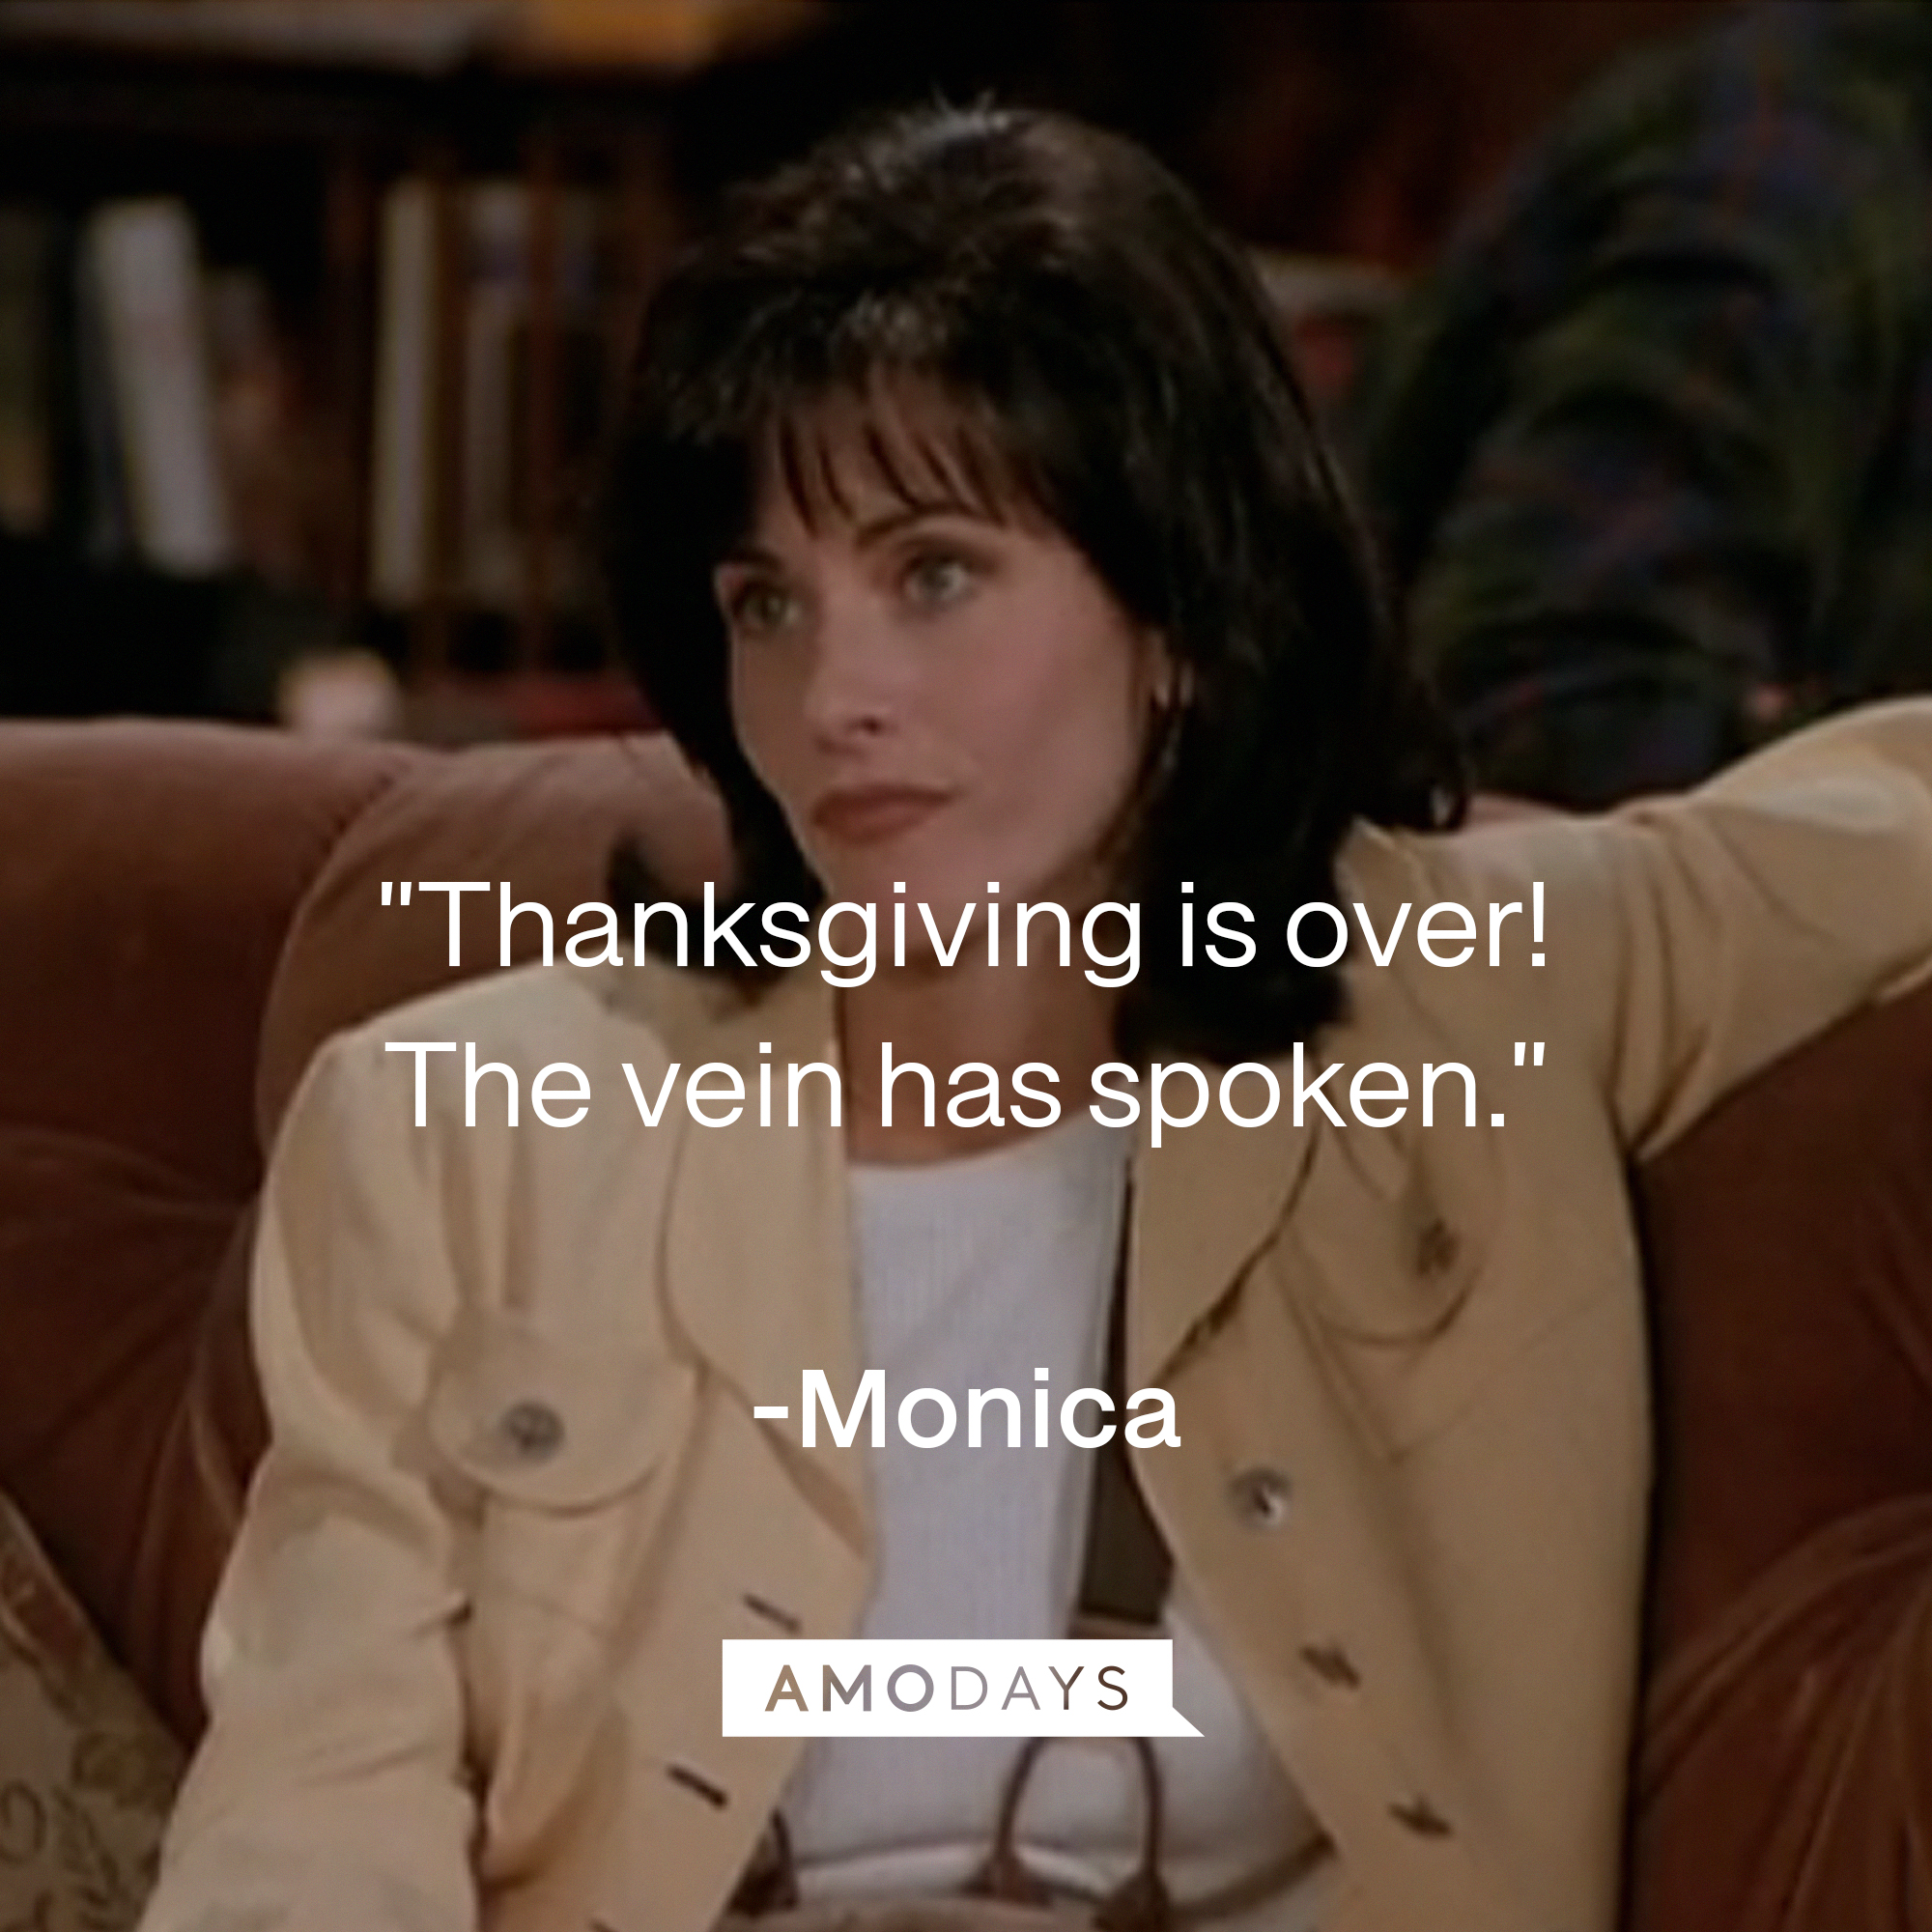 Monica’s quote: "Thanksgiving is over! The vein has spoken." | Source: Facebook/friends.tv